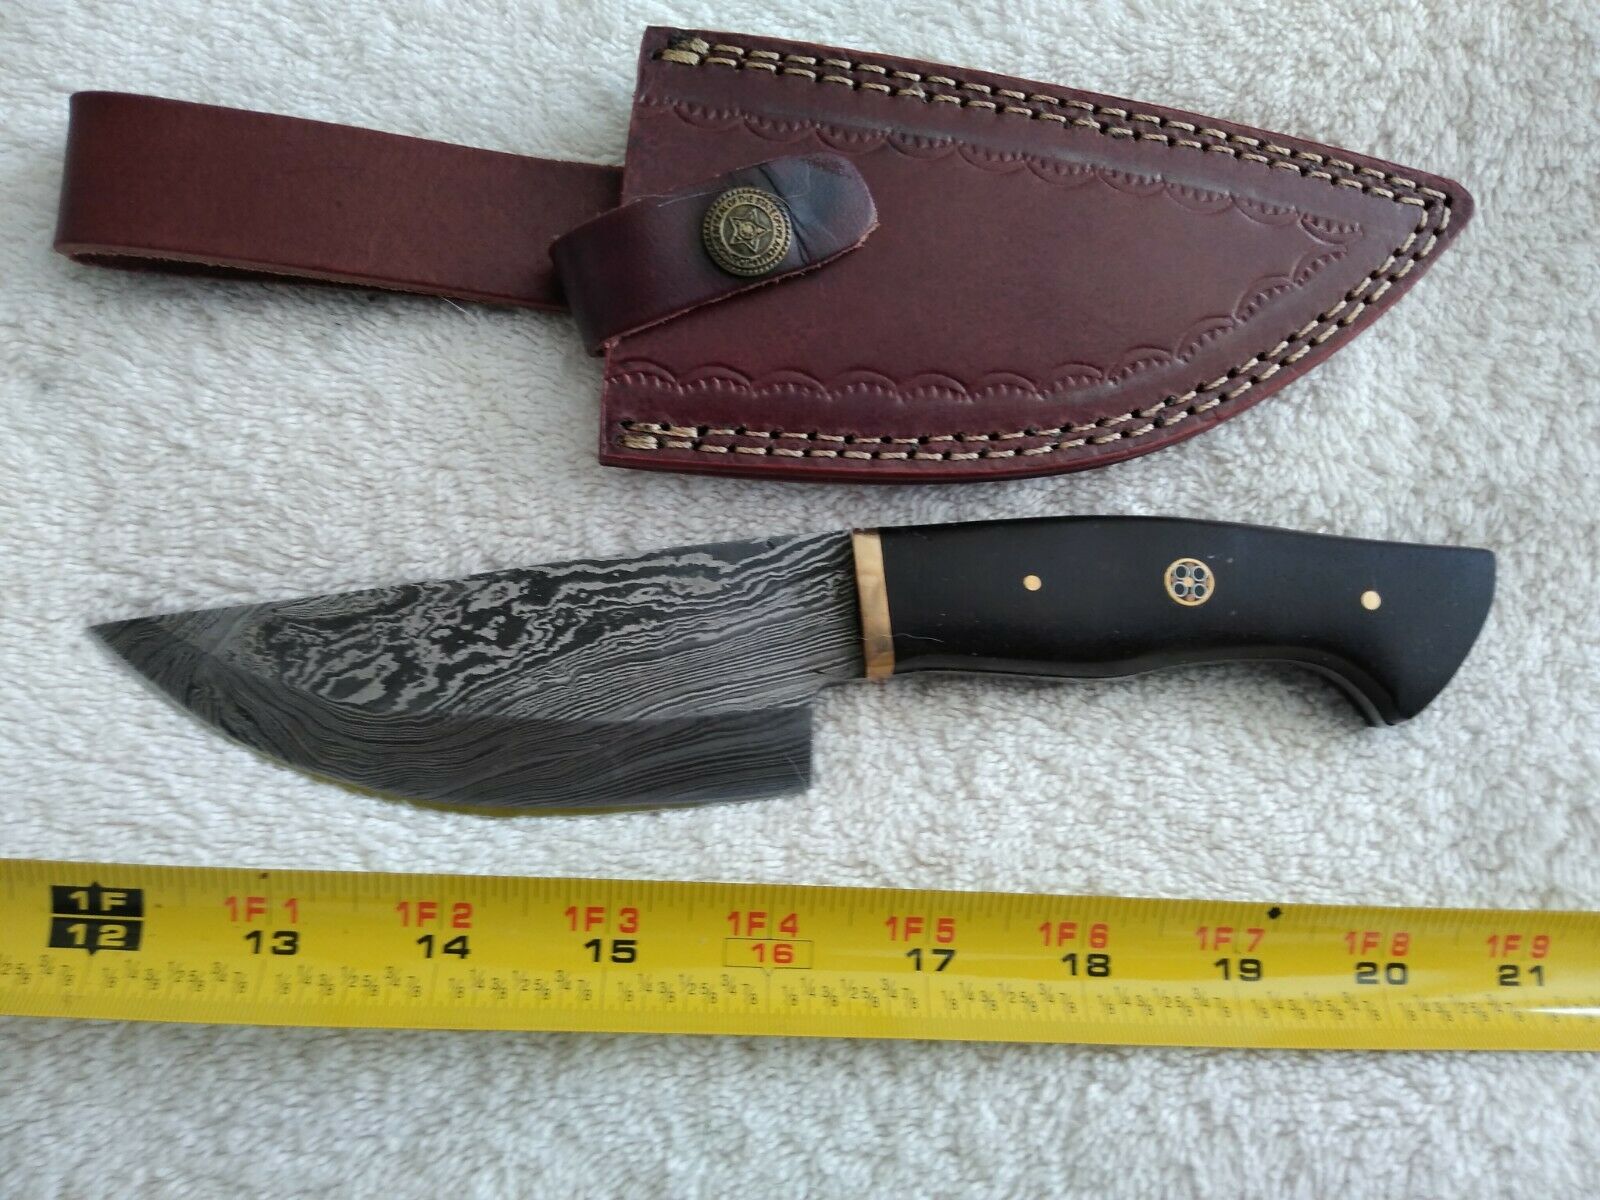 Damascus Hunting Knife, Walnut Handles, Full Tang Blade, Leather Sheath